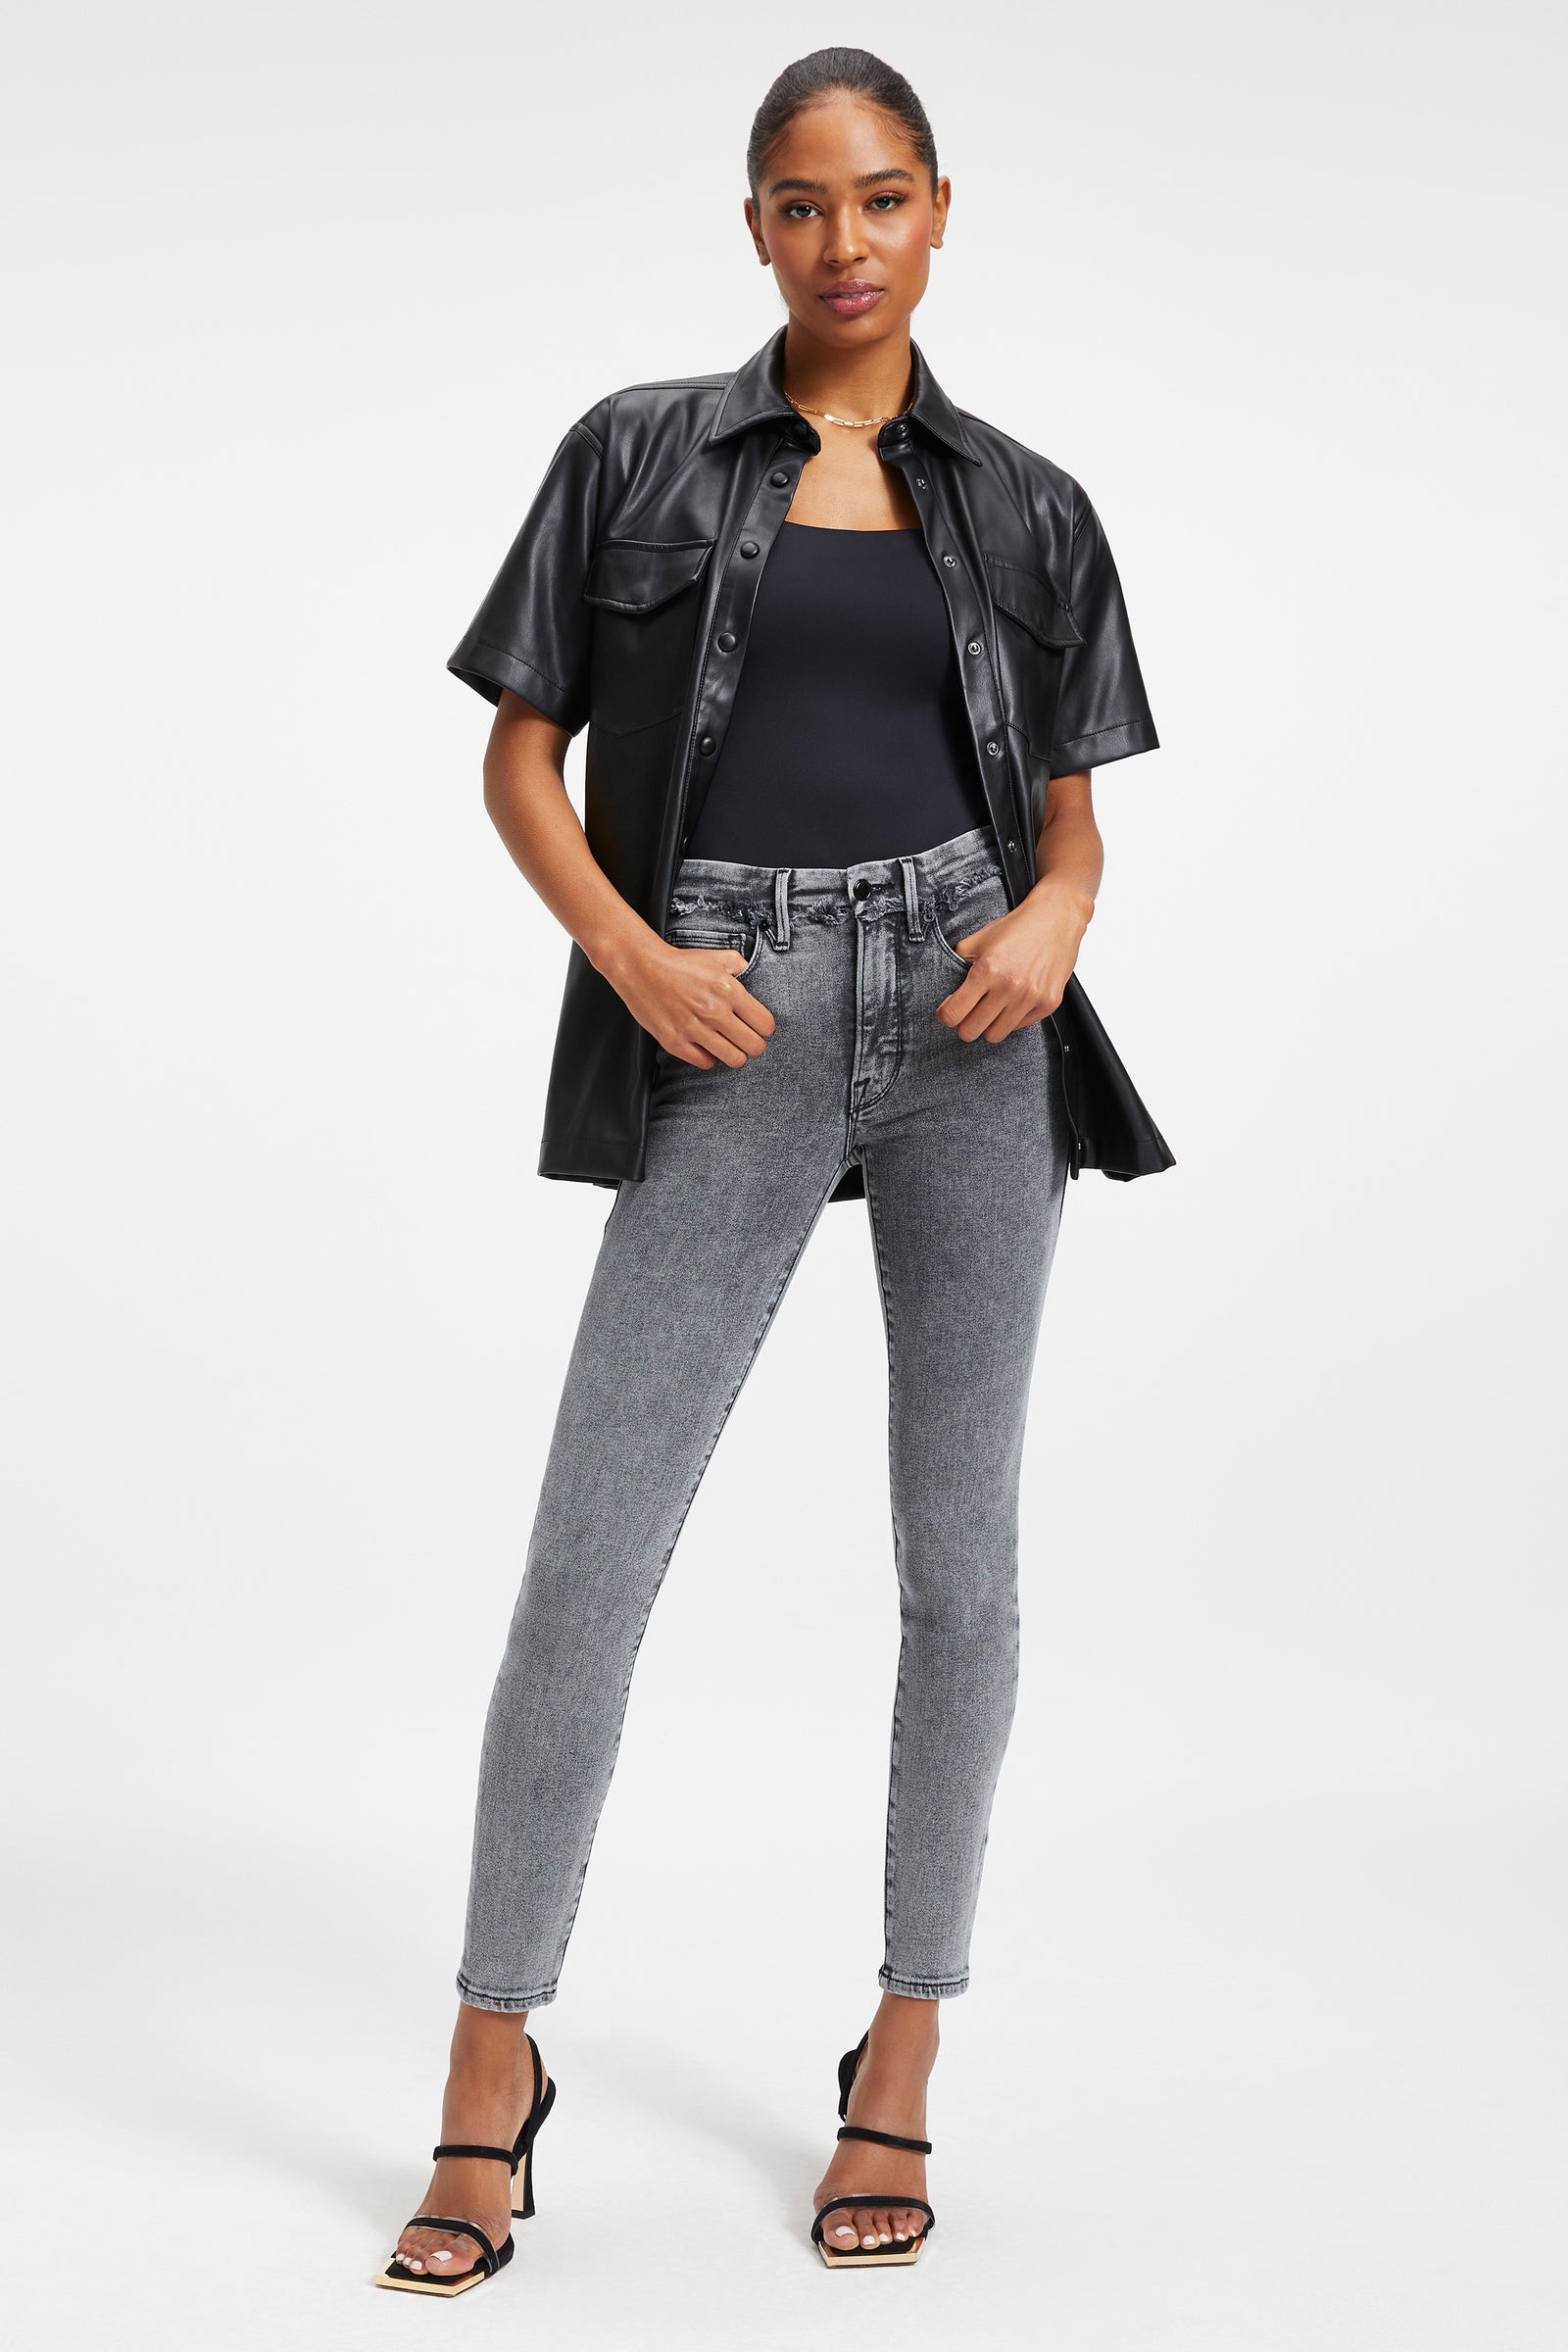 Women's Black Trucker Leather Shirt In Half Sleeve